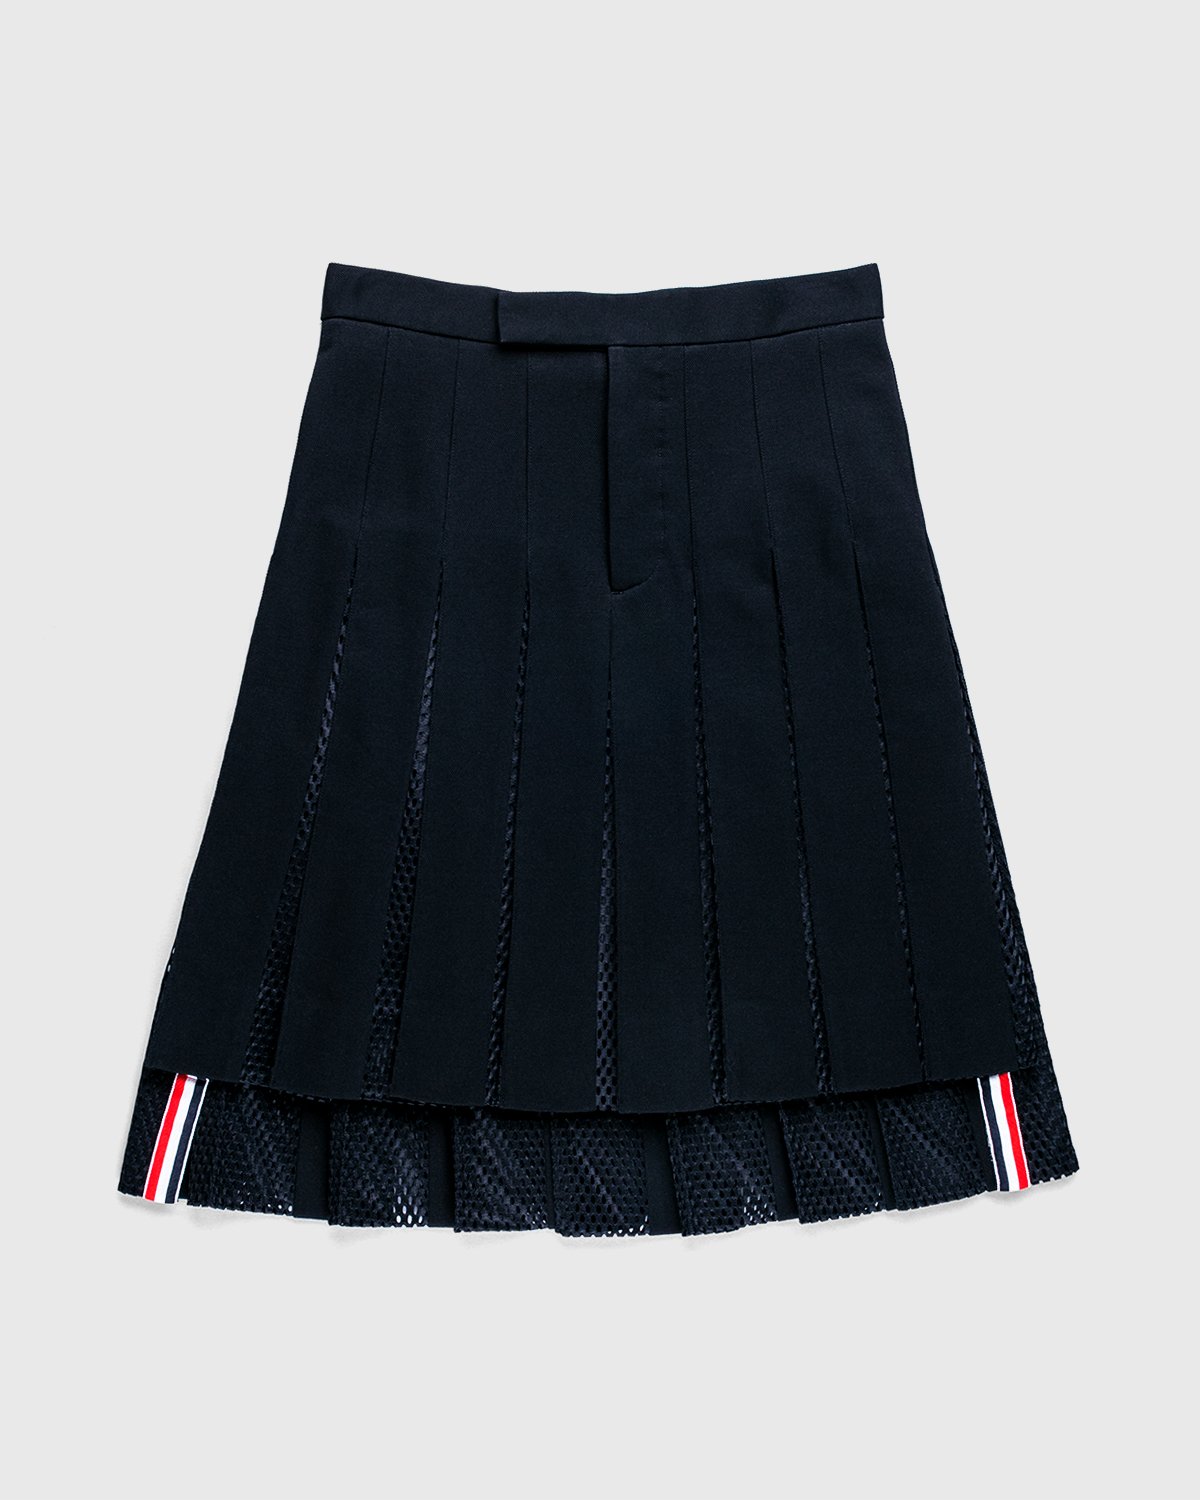 Thom Browne x Highsnobiety - Women’s Pleated Mesh Skirt Black - Clothing - Black - Image 1